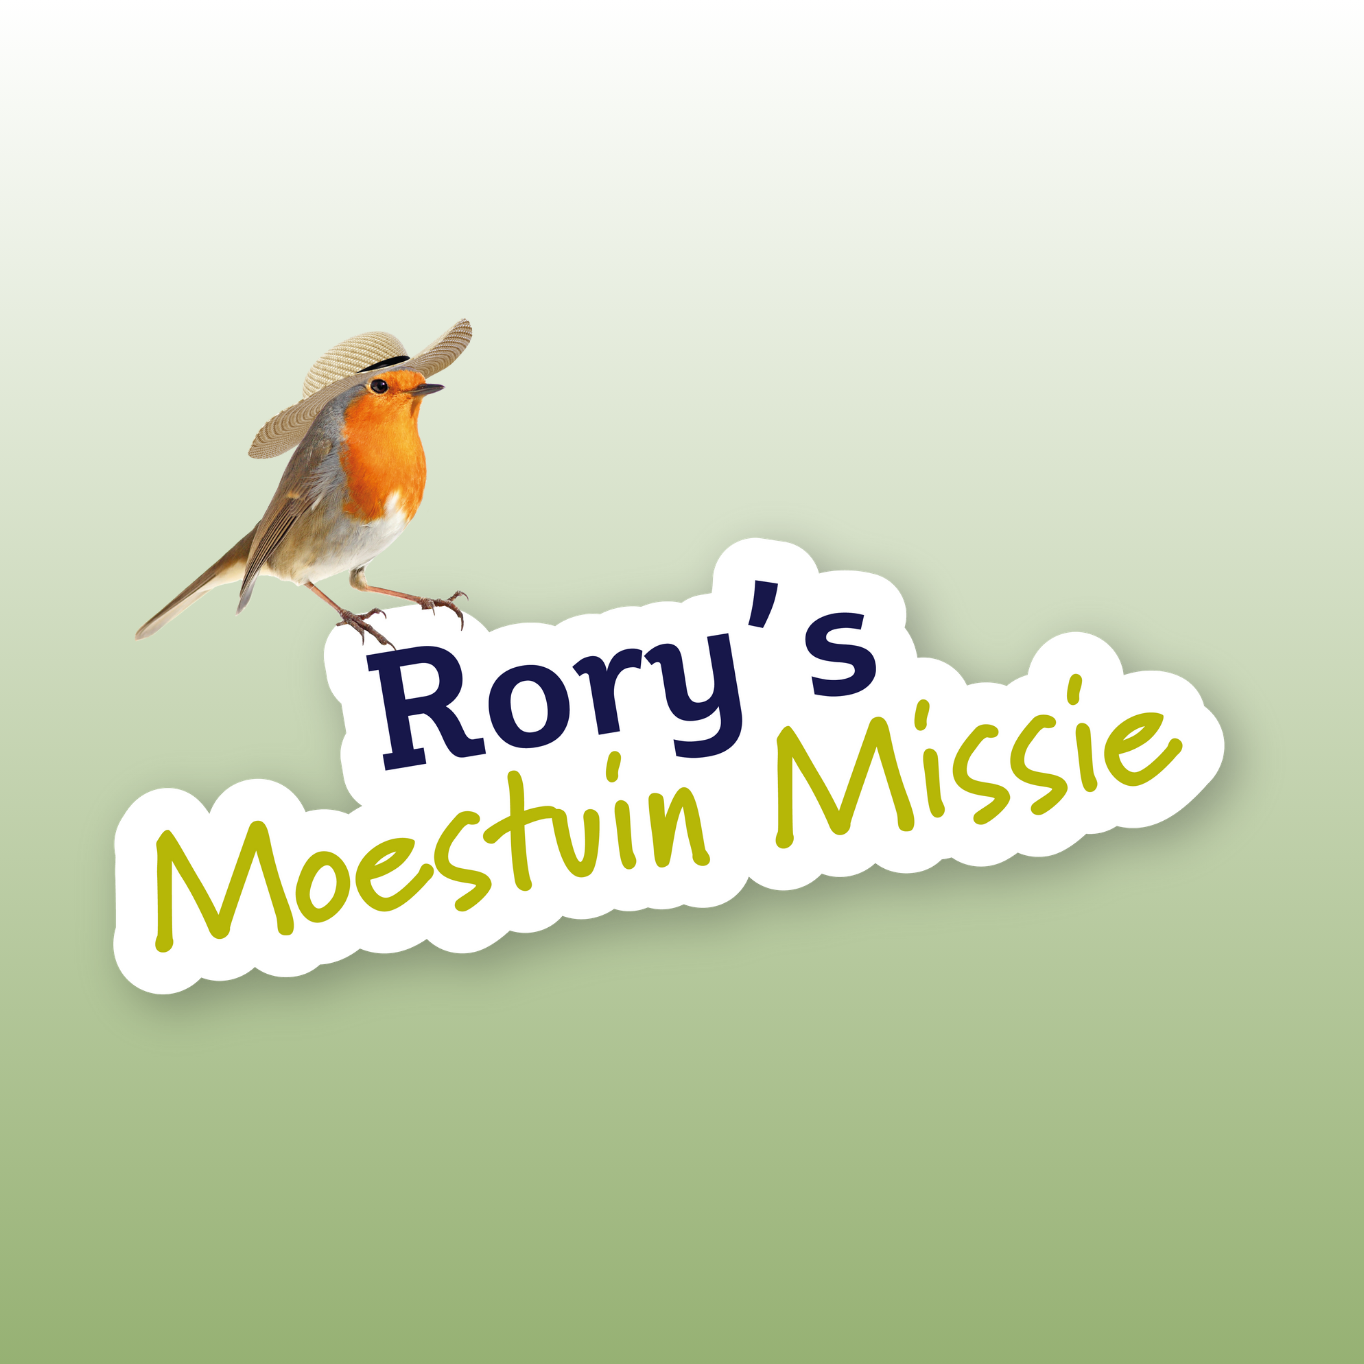 Rory's Moestuin Missie